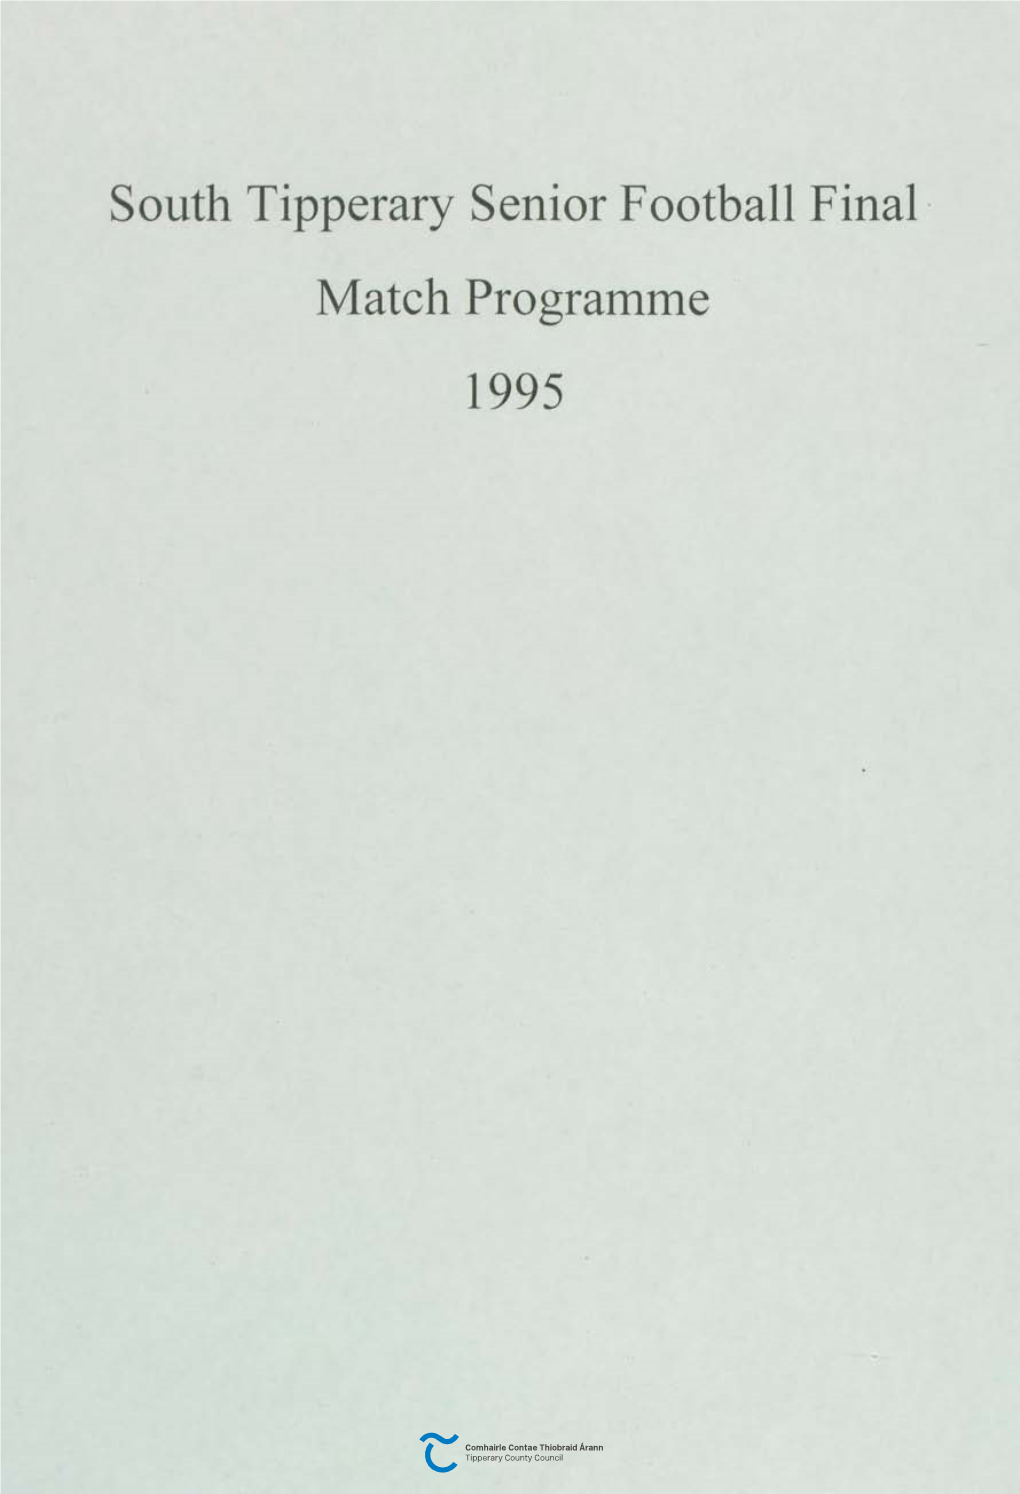 South Tipperary Senior Football Final Match Programme 1995 Ard Fhionain 6-8-95,3.15 I.N